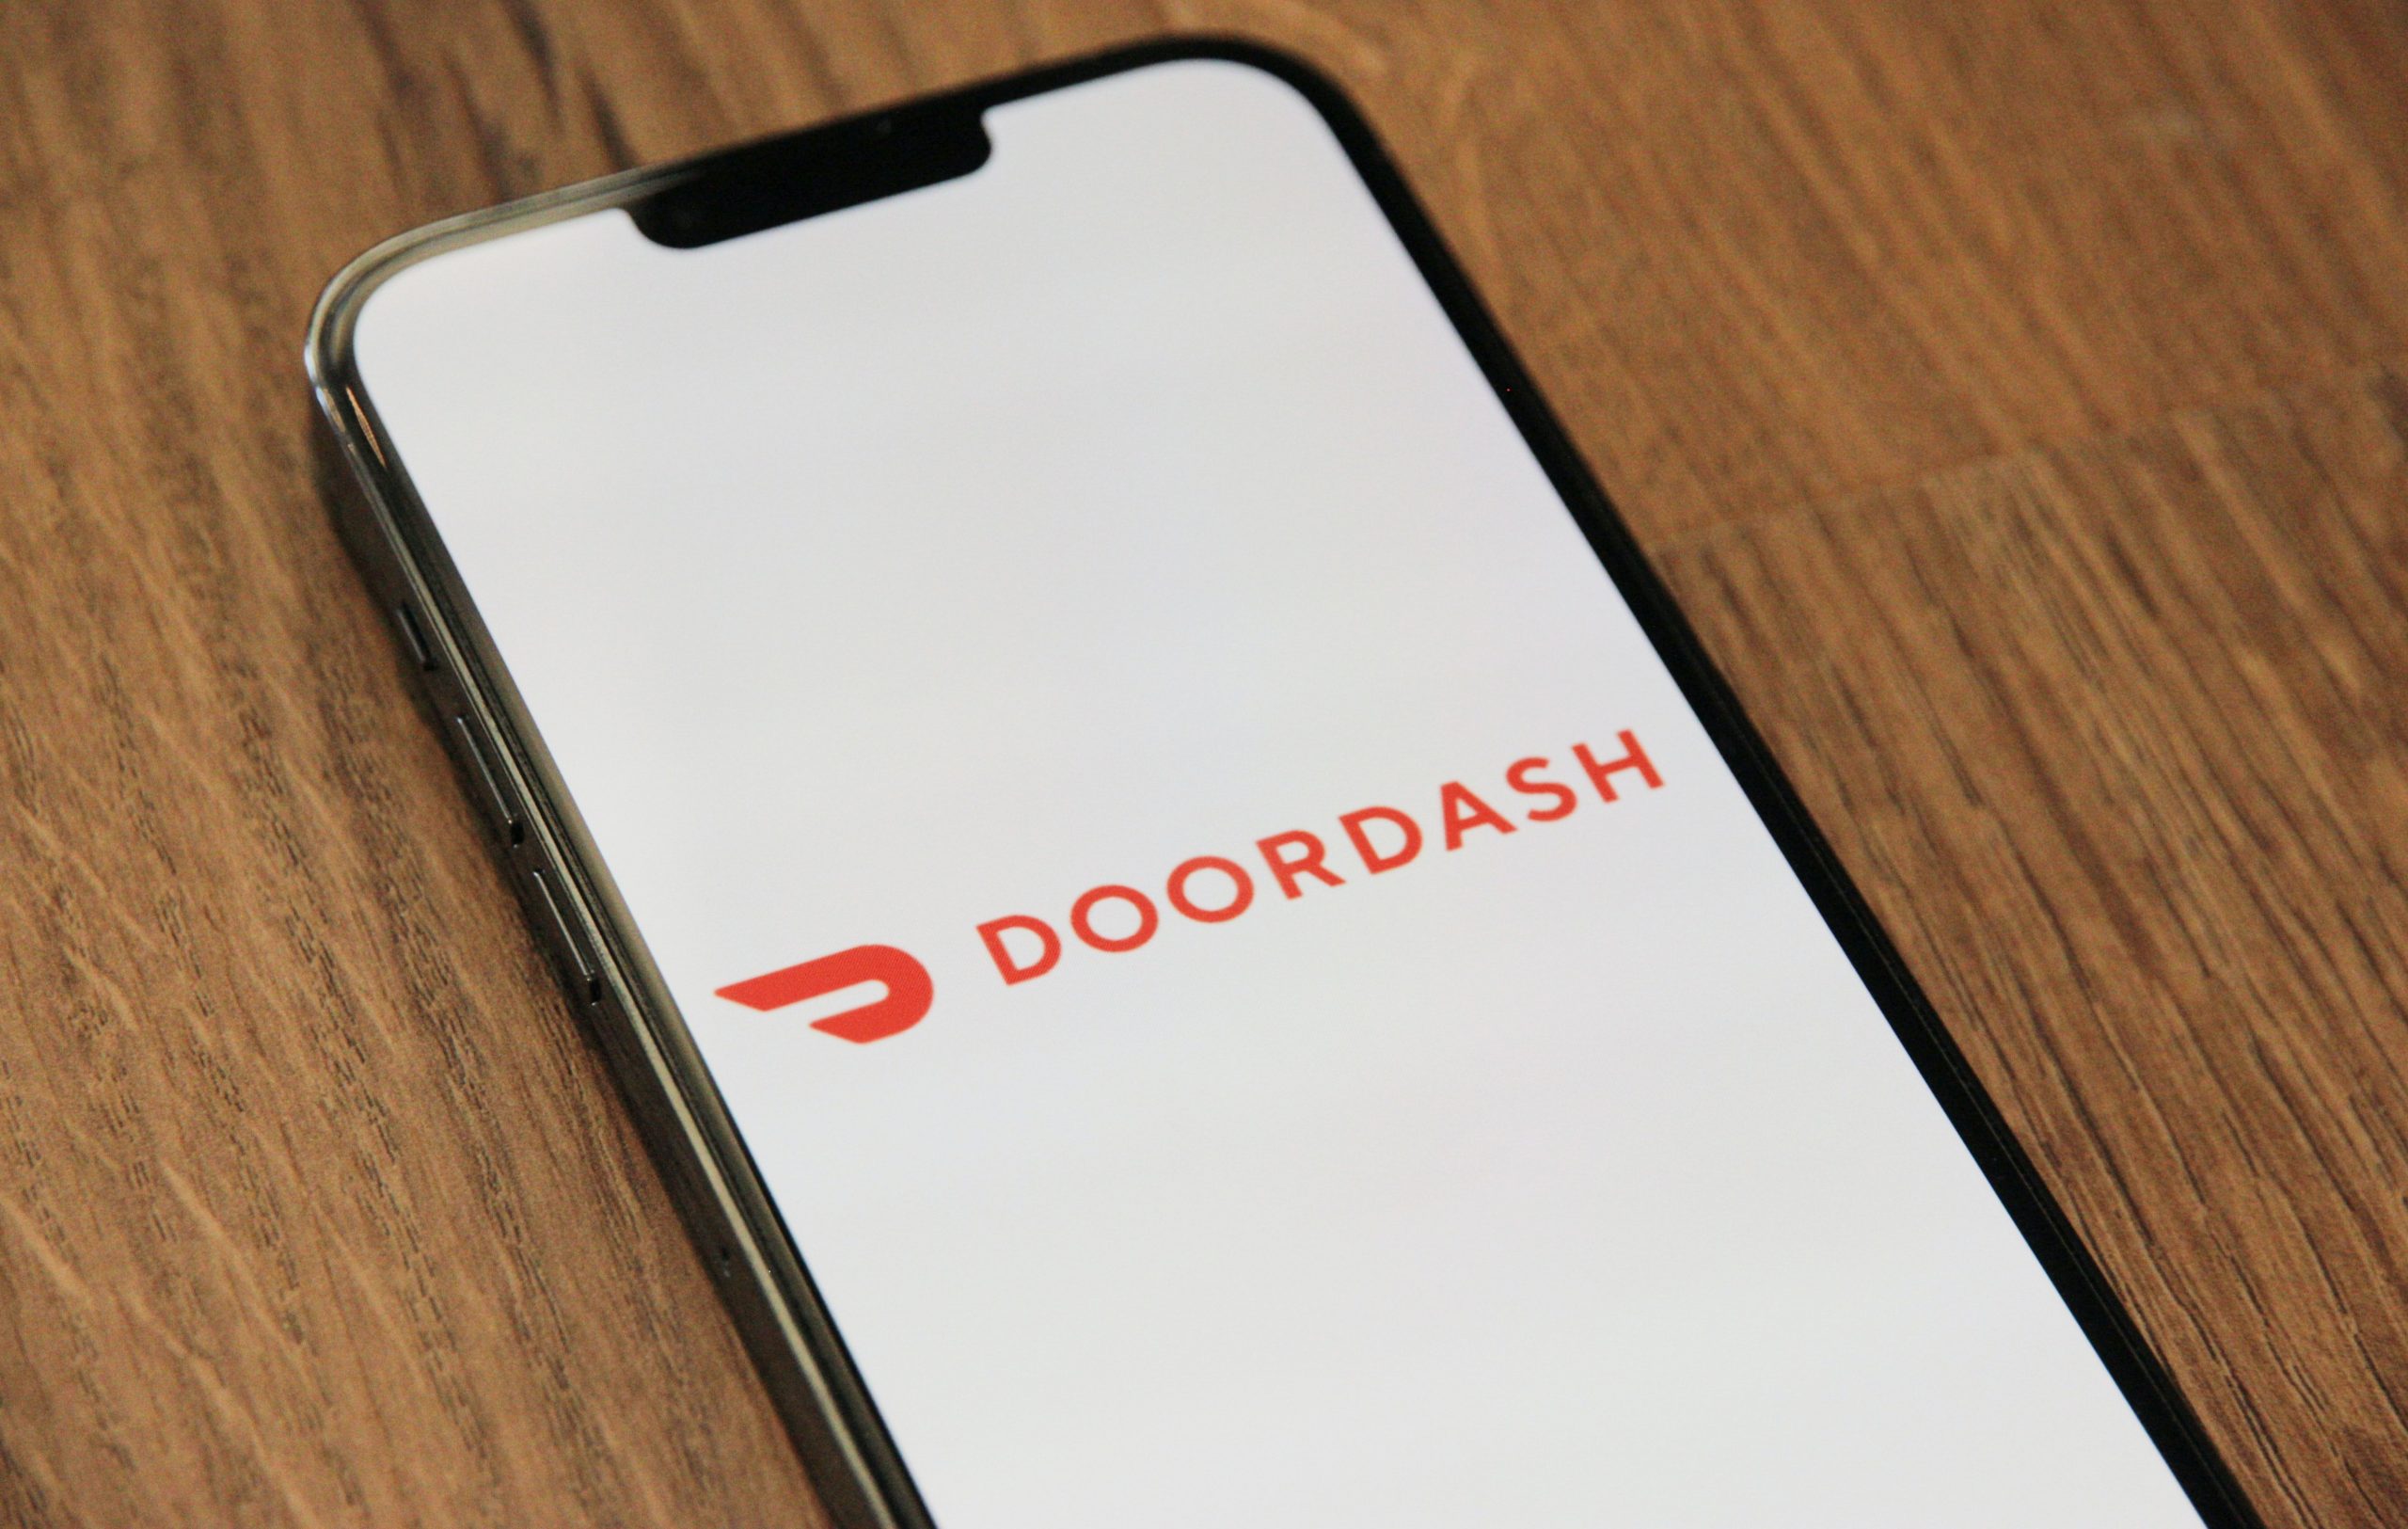 DoorDash plans to sack 1,250 employees to cap costs